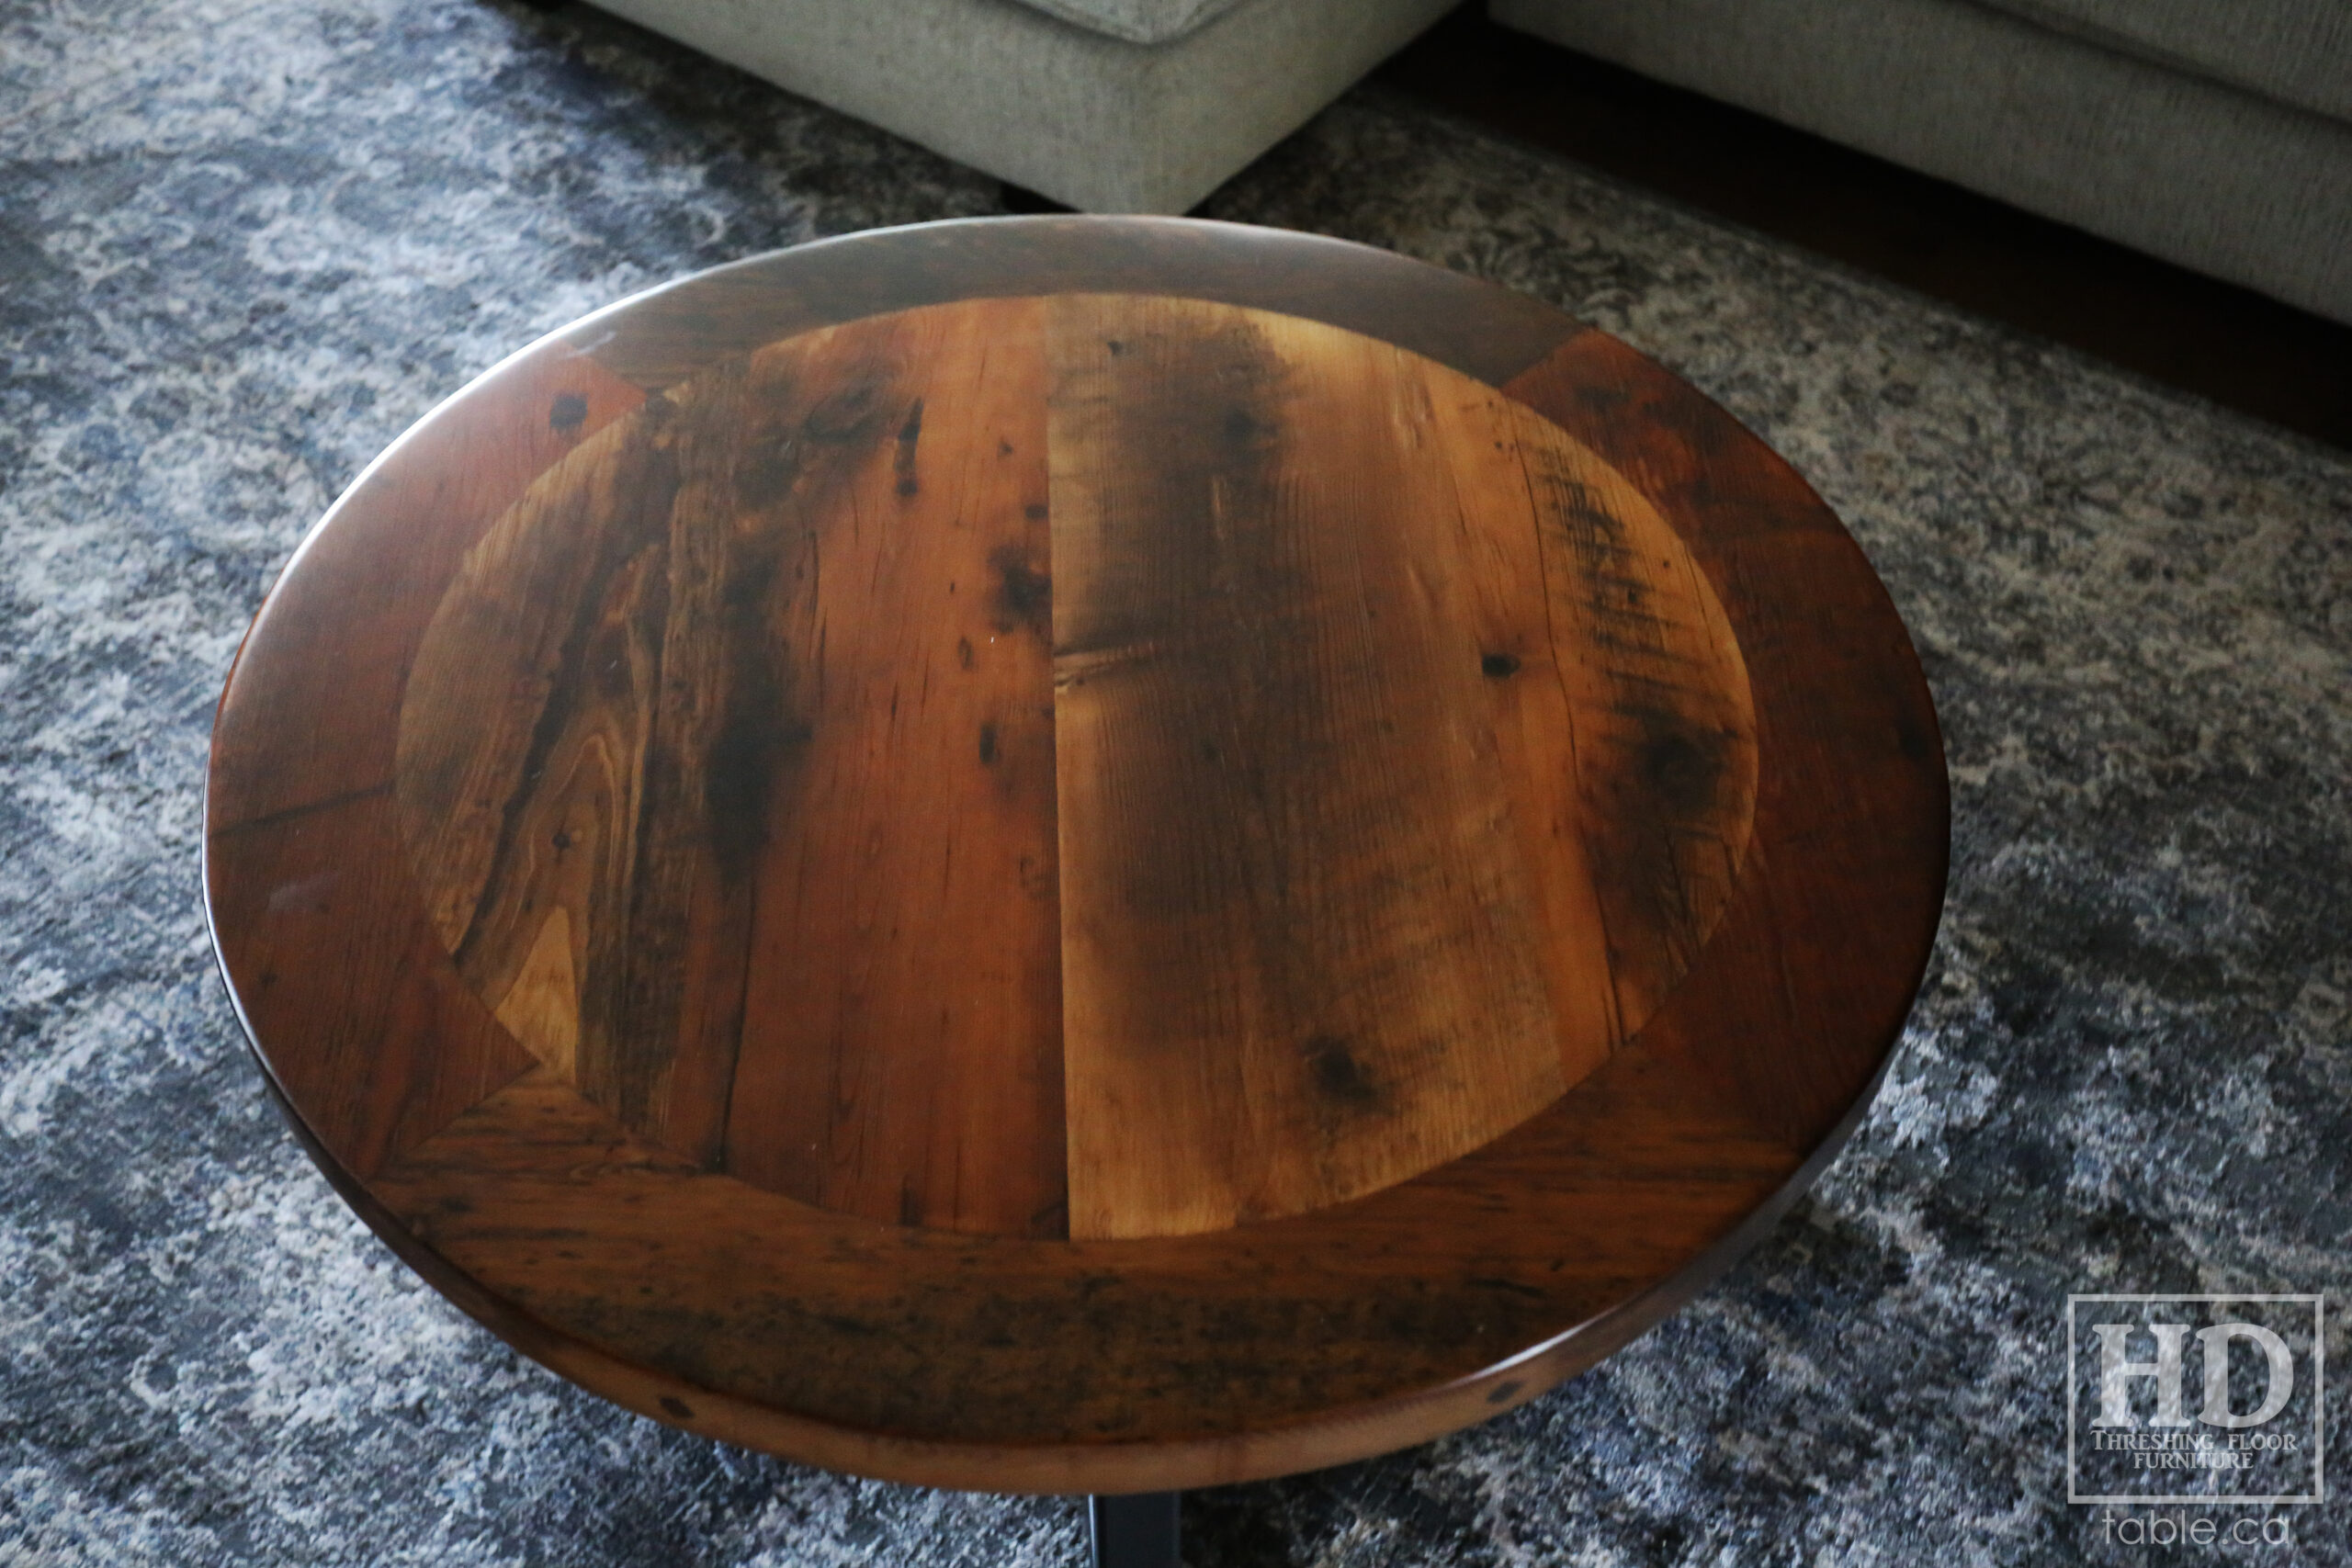 Ontario Barnwood Coffee Table - Reclaimed Hemlock Threshing Floor 2" Top - Premium epoxy/polyurethane finish - Original distressing maintained - U Shaped Metal Base 